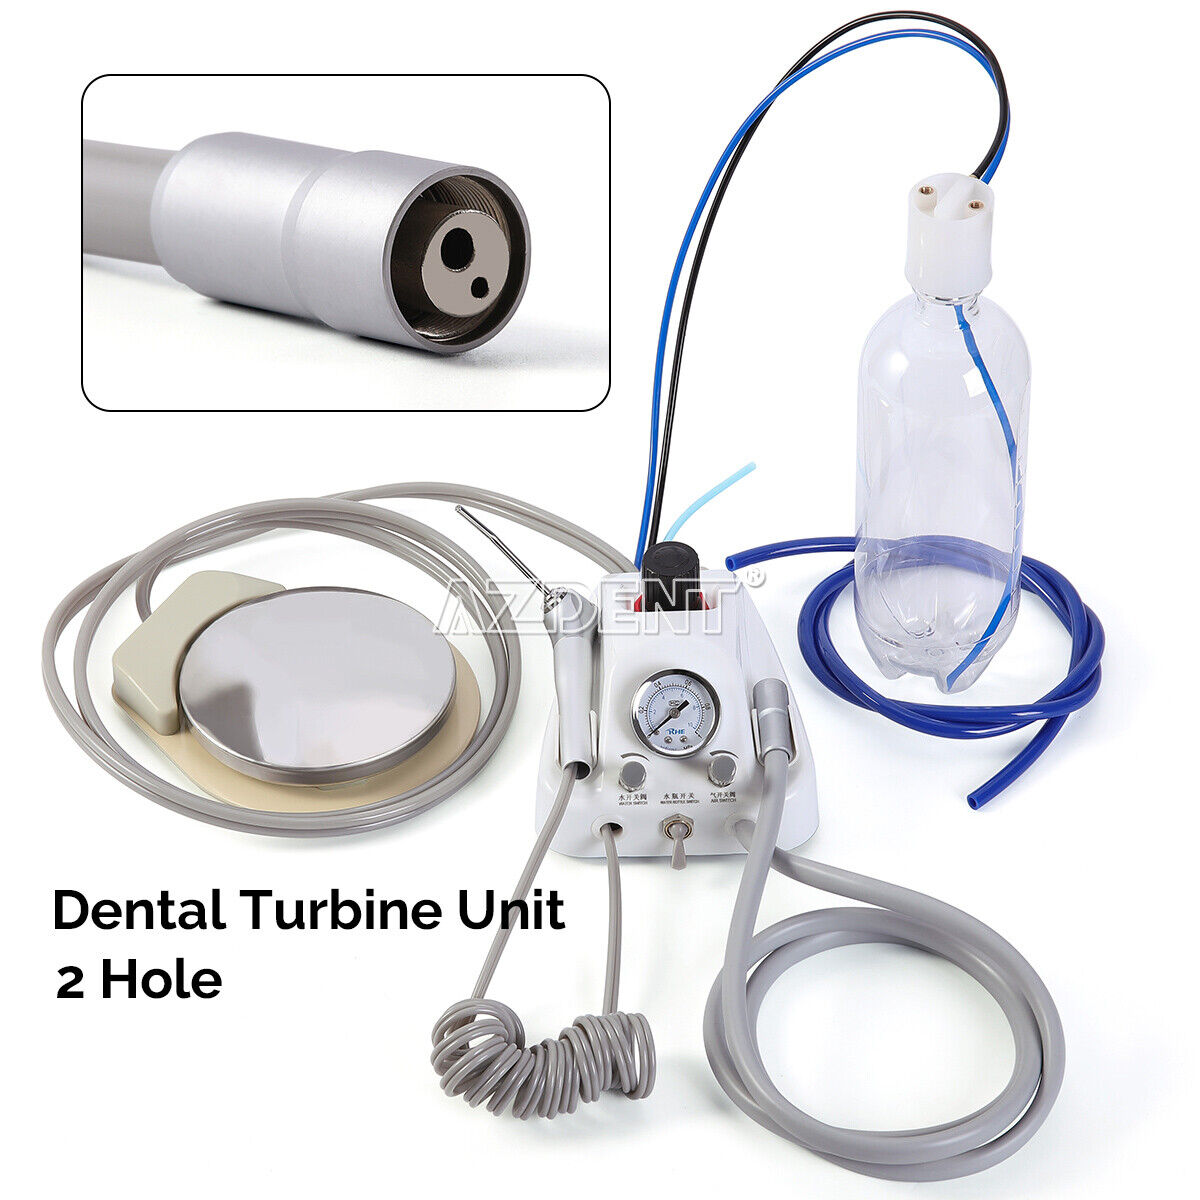 Portable Dental Unit Dental Turbine Unit 2Hole or 4Hole work with Air Compressor